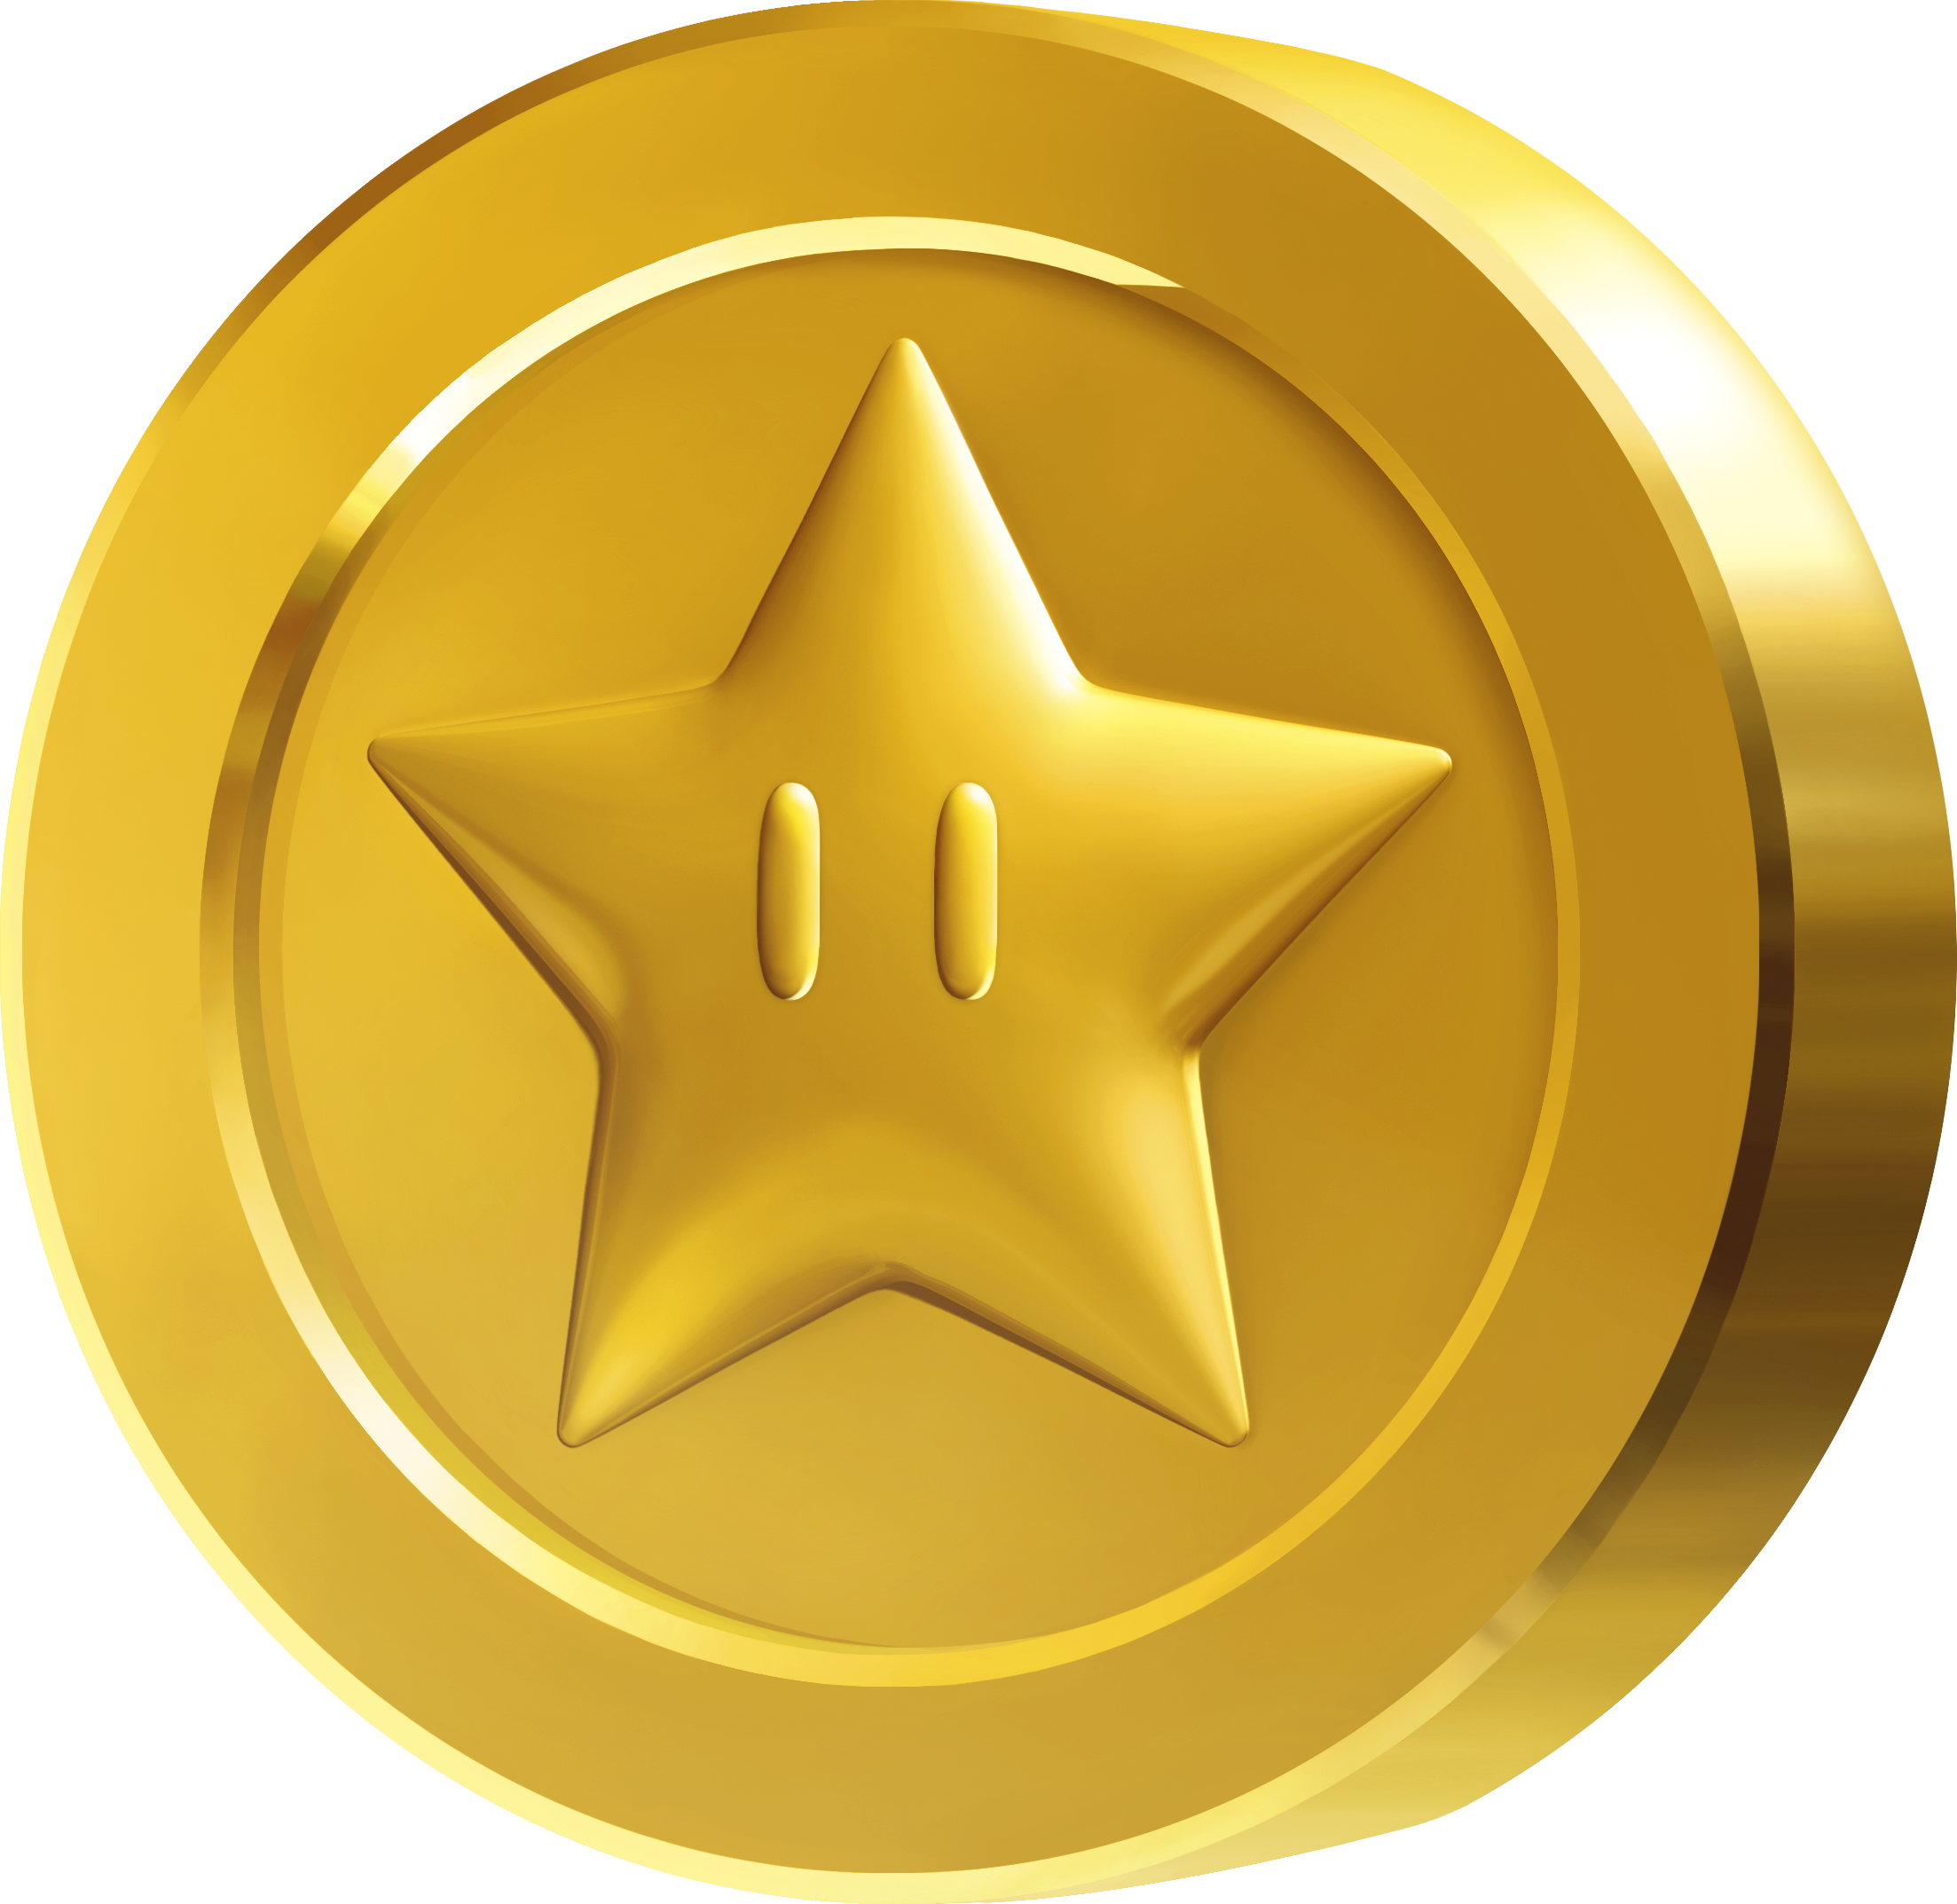 Star Coin - MarioWiki, the encyclopedia of everything Mario